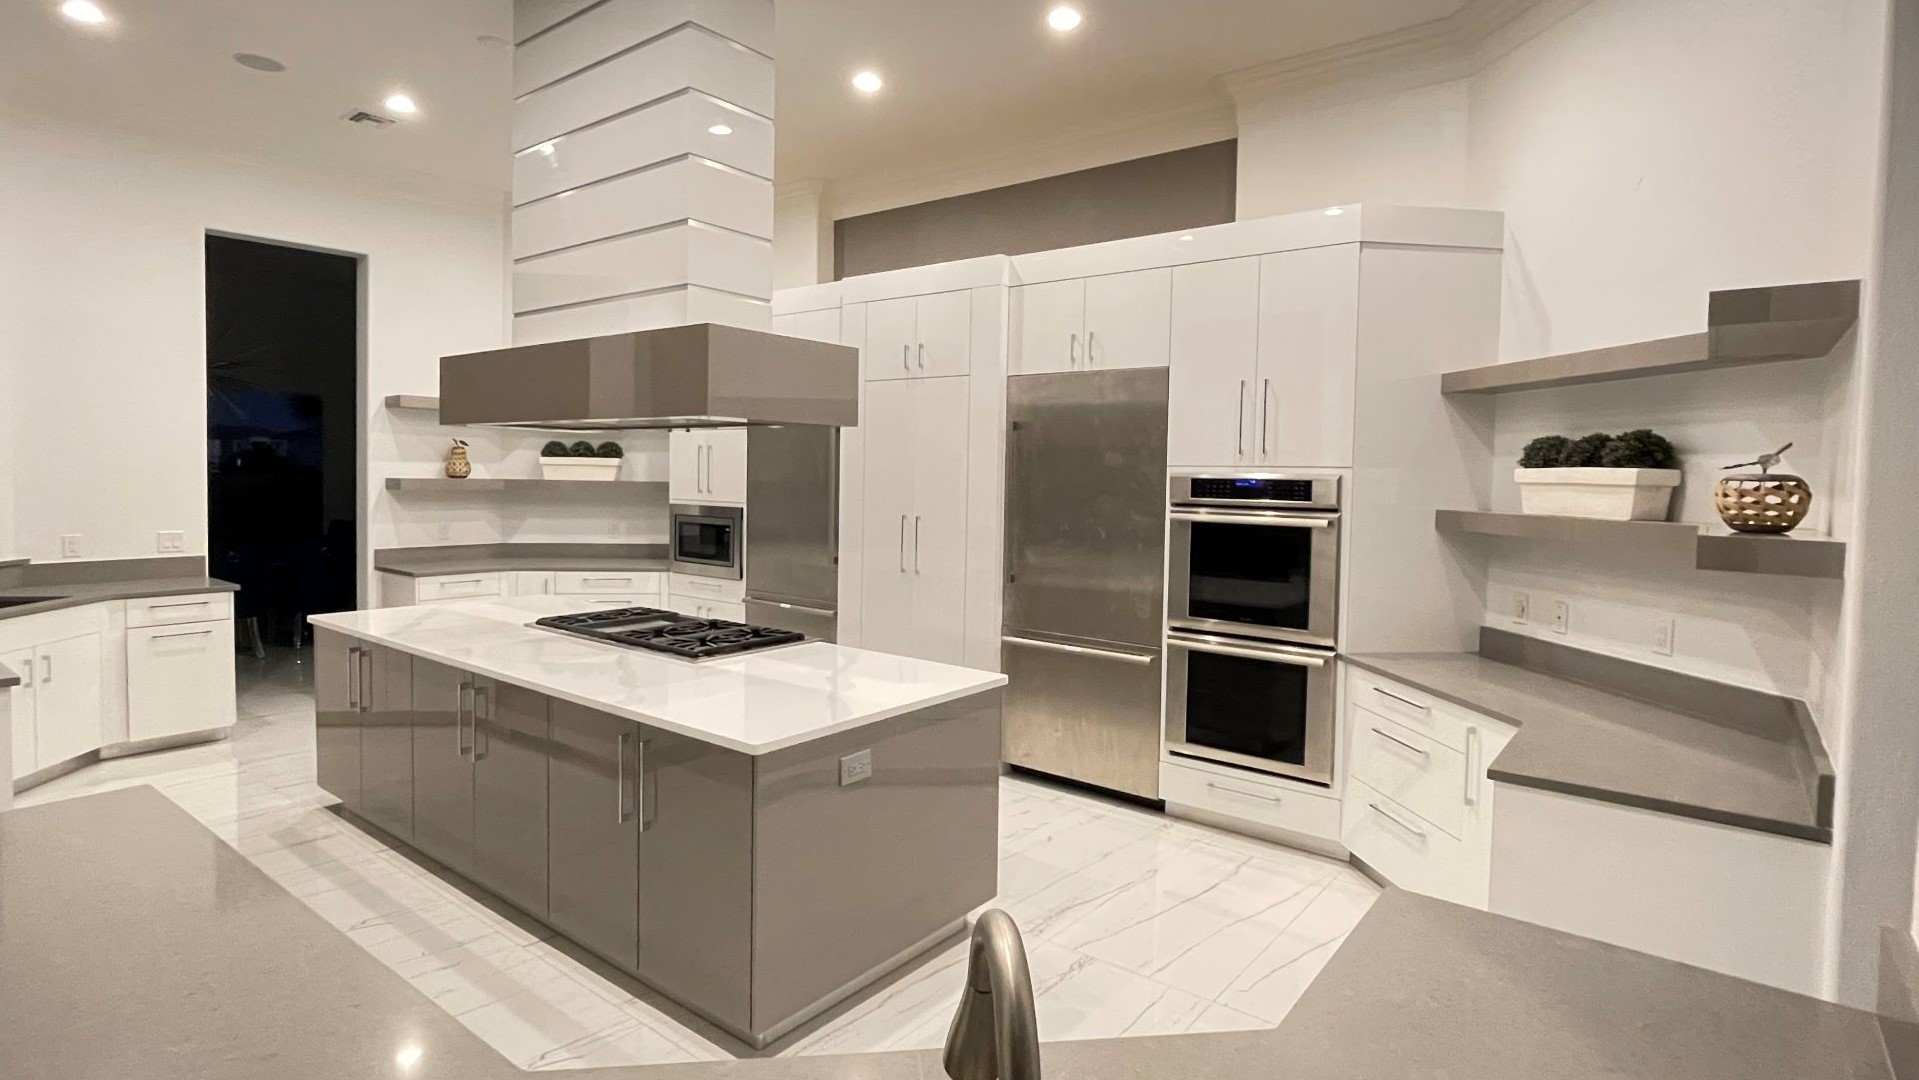 nu kitchen designs modern kitchen remodel in white cabinets quartz countertop ss appliances custom hood